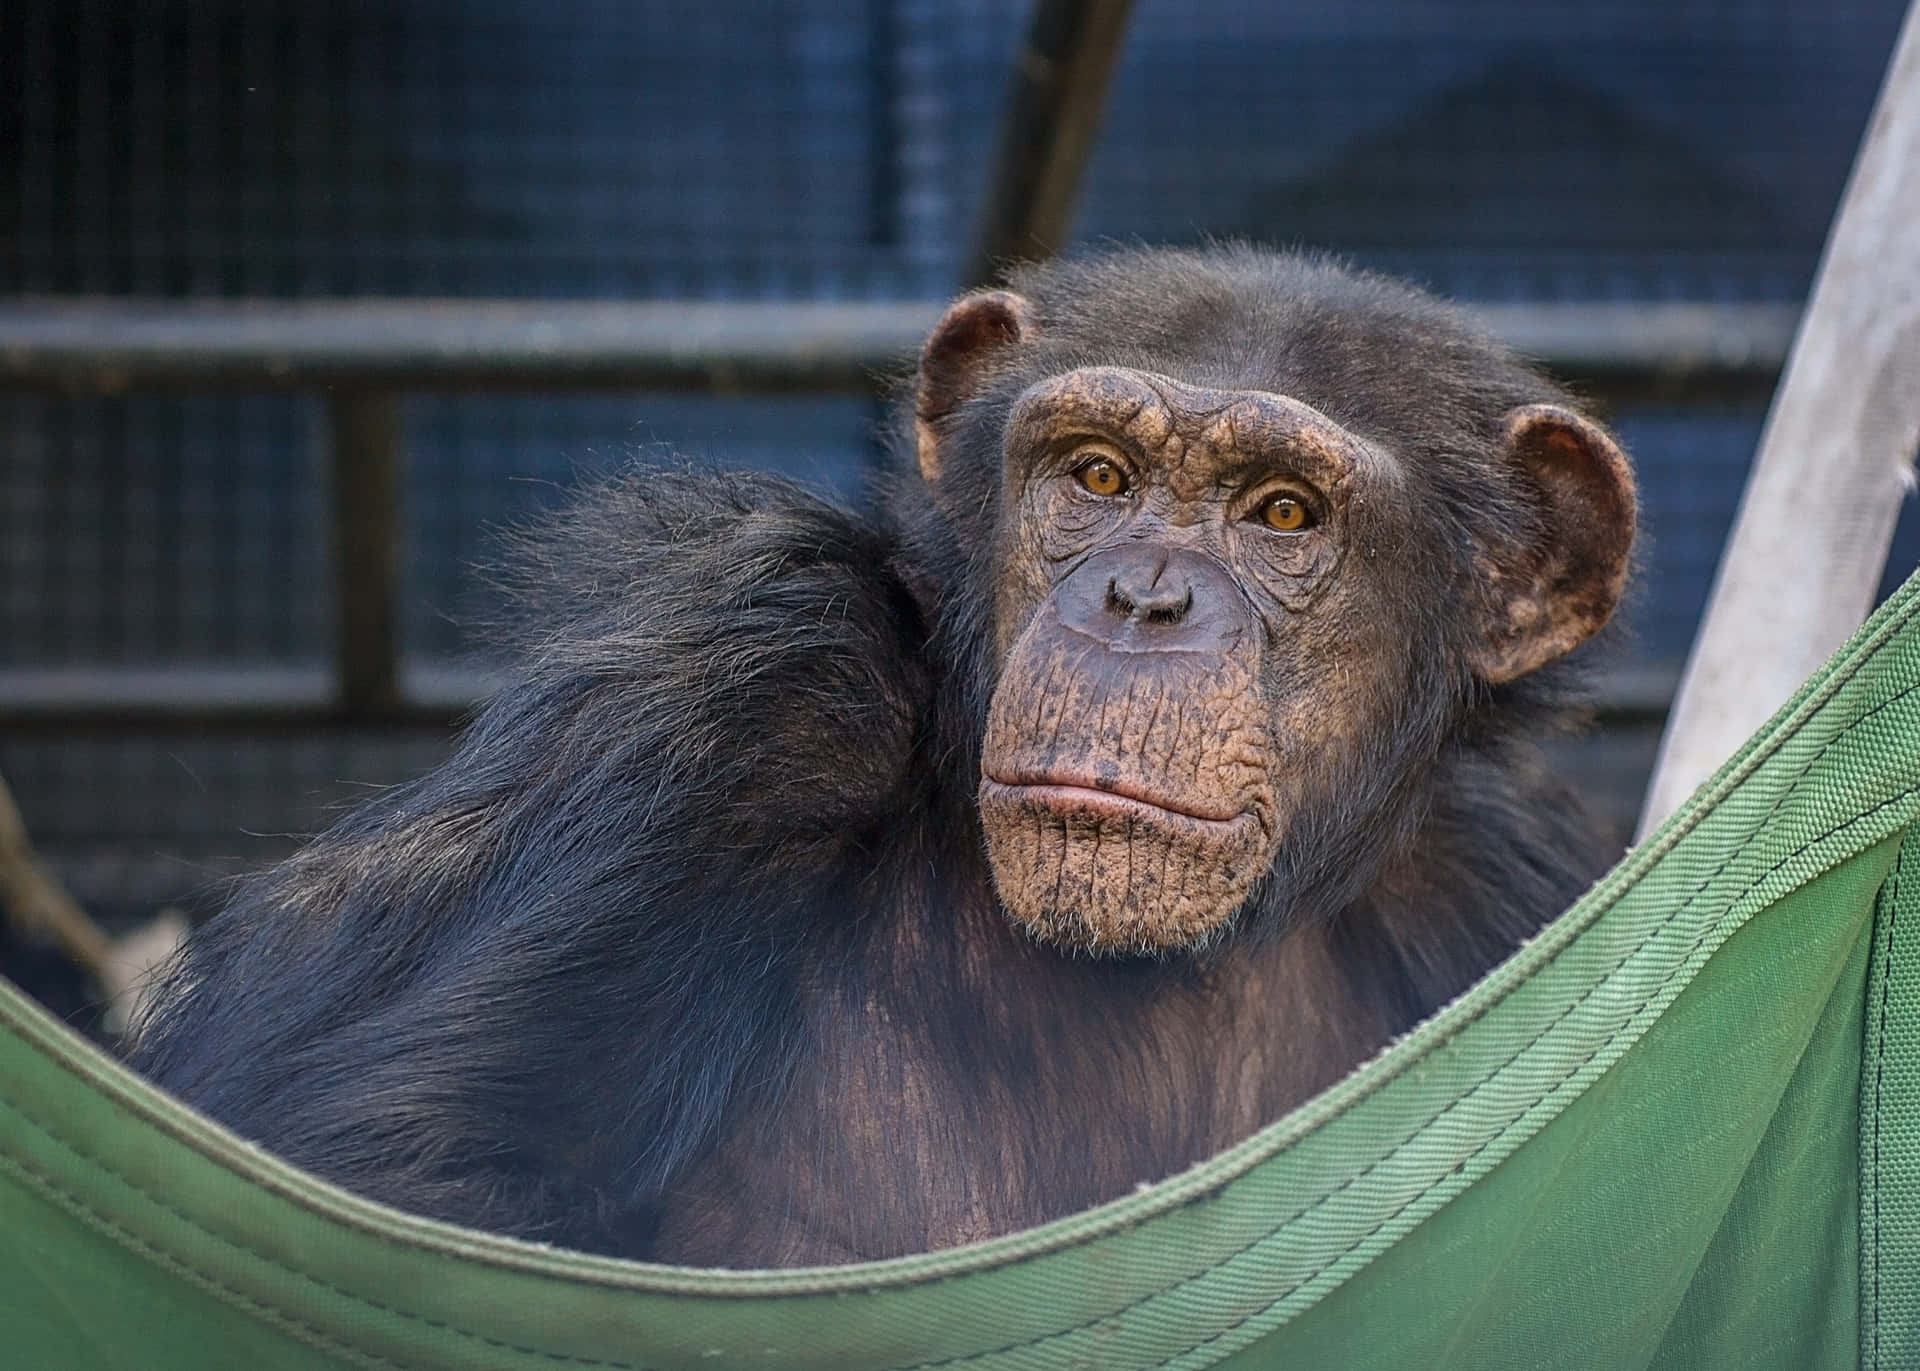 "Adorable Chimpanzee Enjoying His Day"